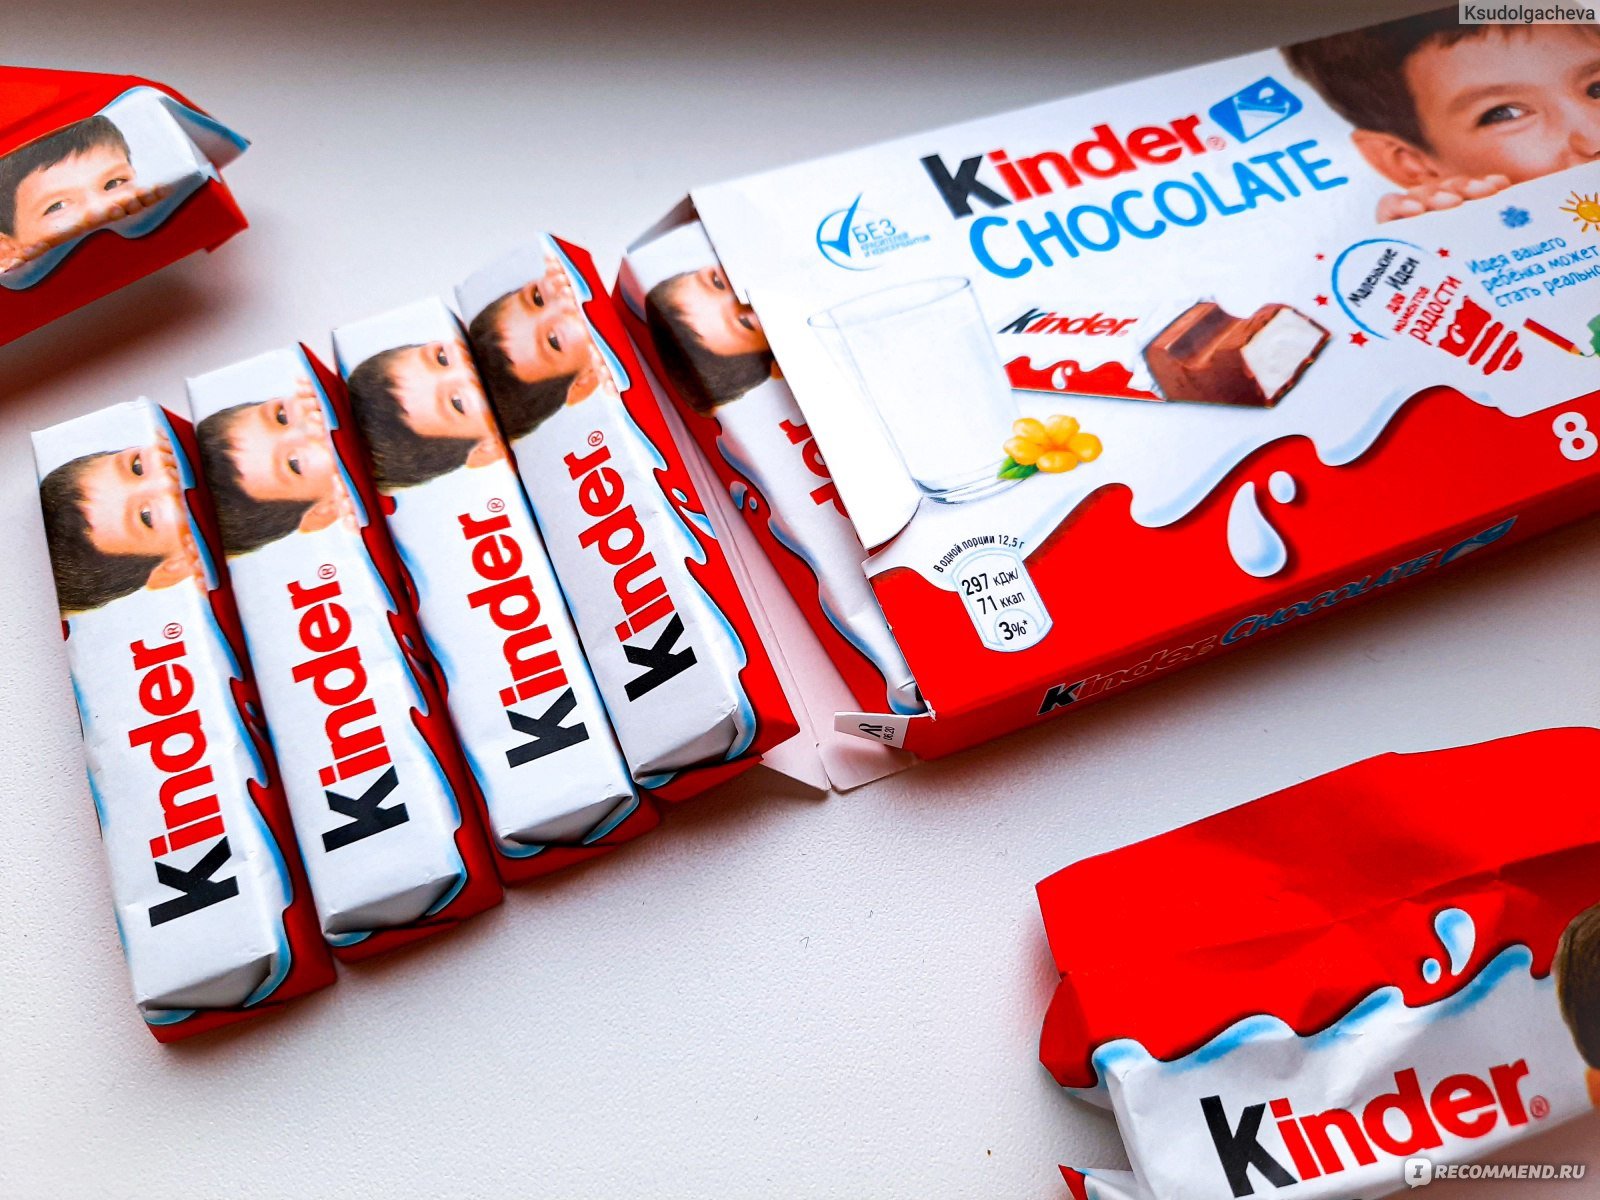 Kinder 12. Шоколадка Киндер. Шоколад kinder Chocolate. Kinder Chocolate упаковка. Упаковка шоколадок Киндер.